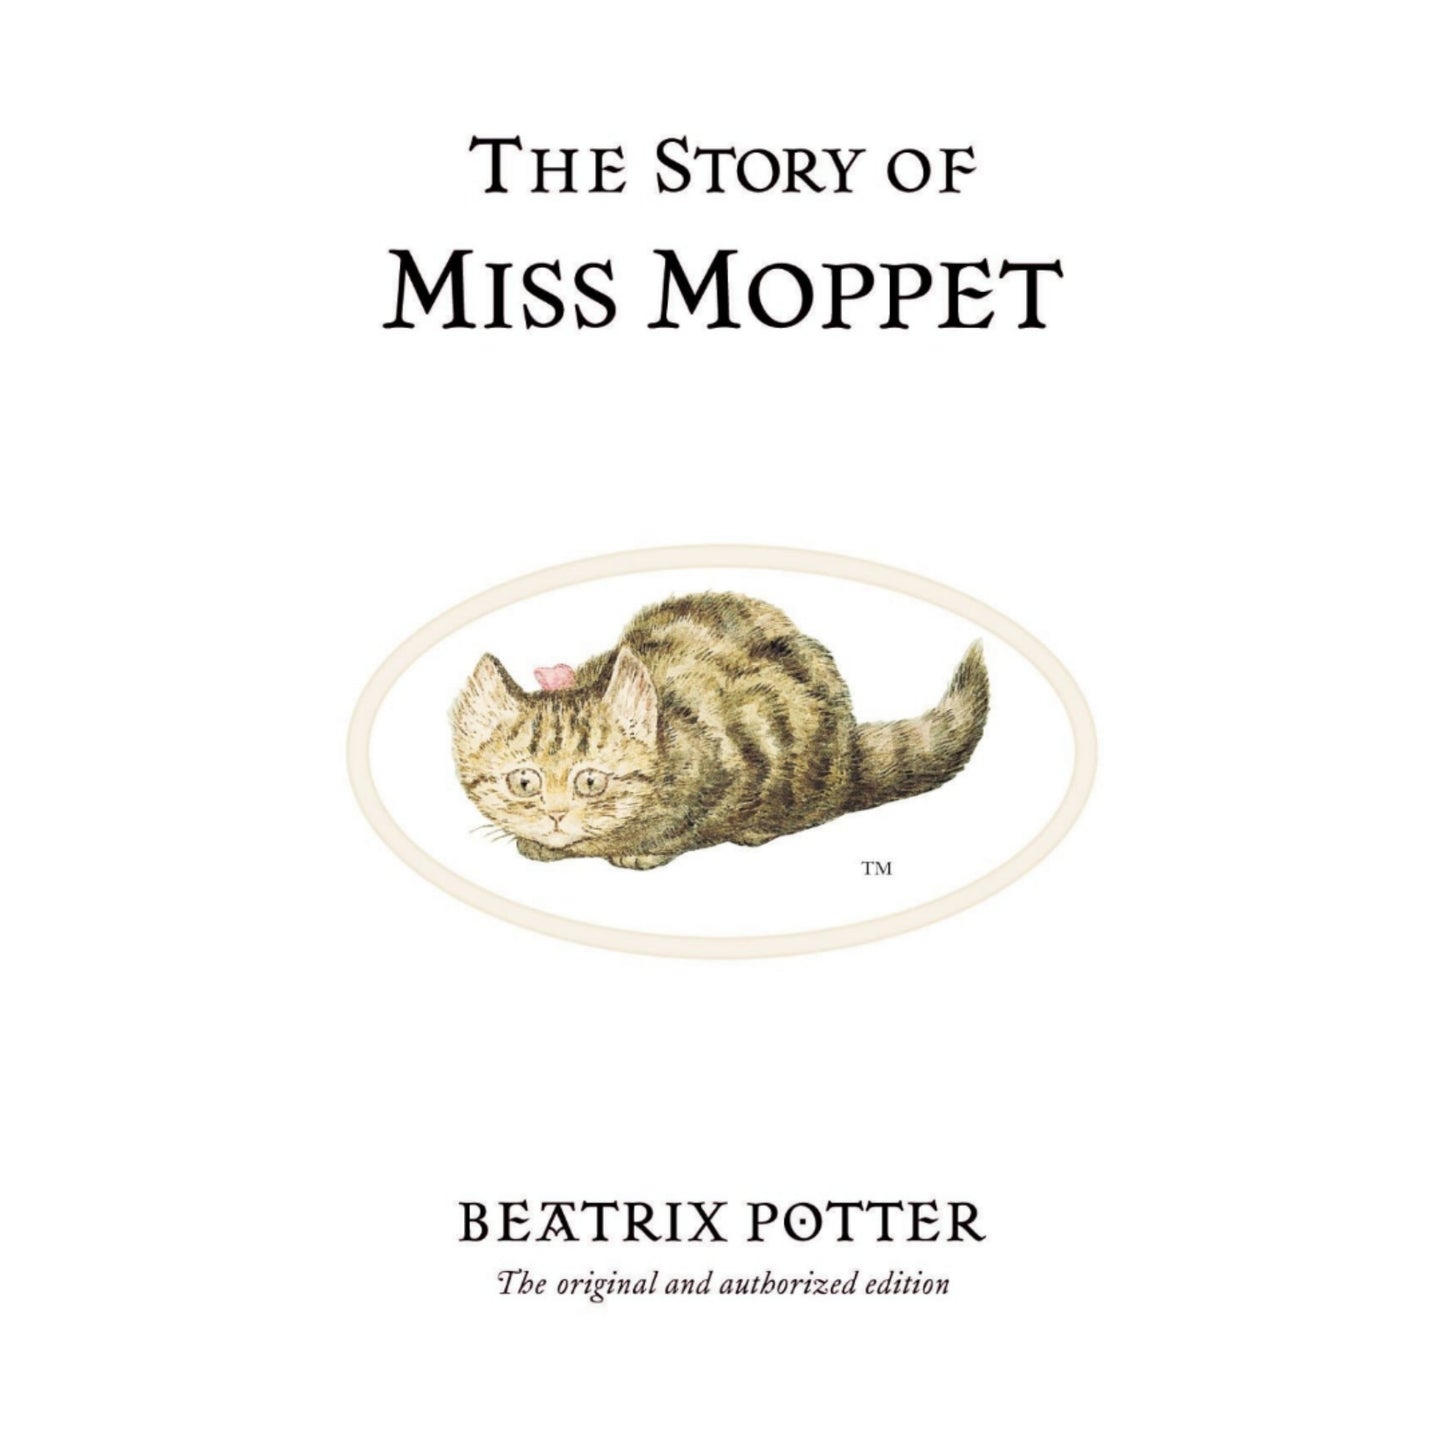 Peter Rabbit Books: Original Tales by Beatrix Potter